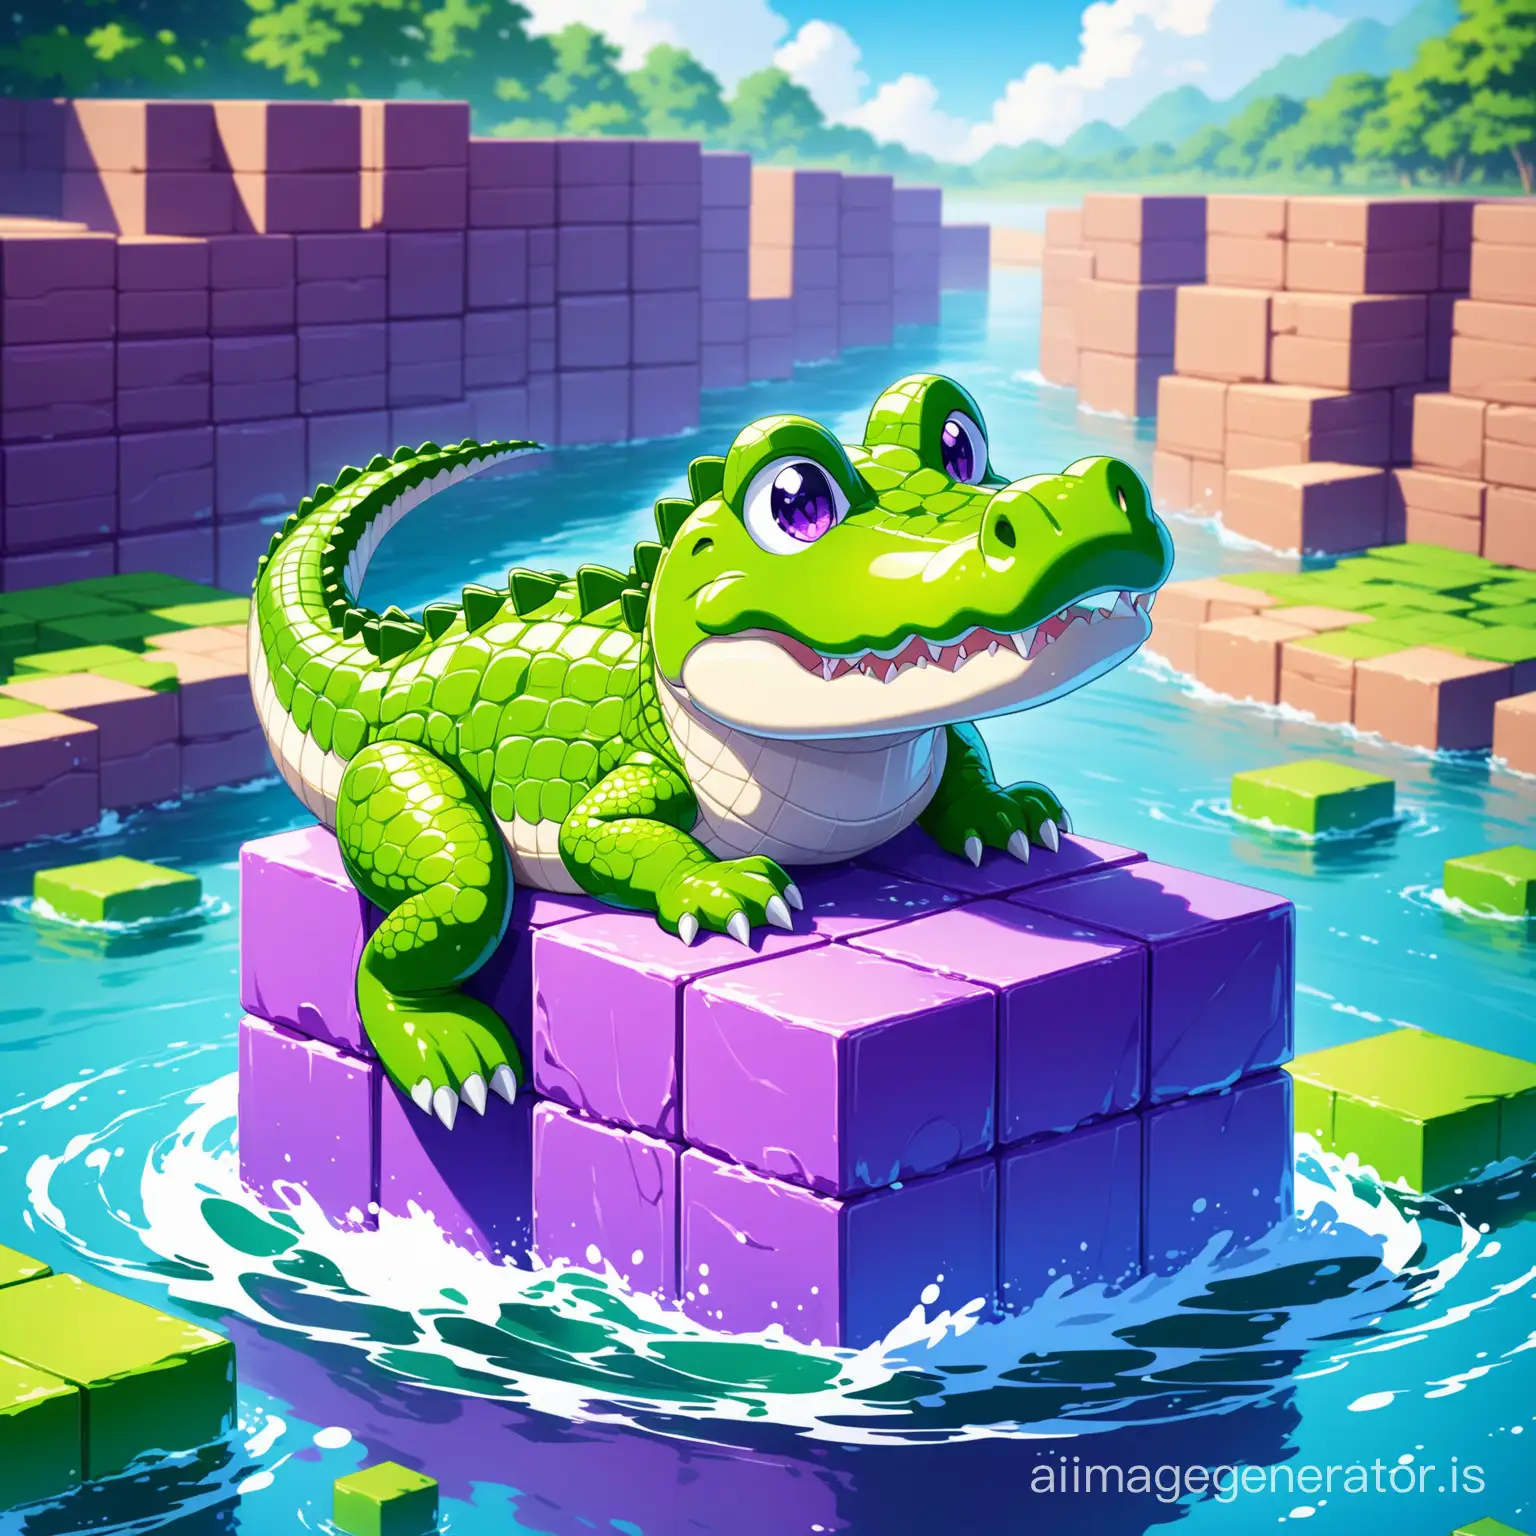 Adorable-Crocodile-Enjoying-Purple-Block-Feast-in-Detailed-River-Scene